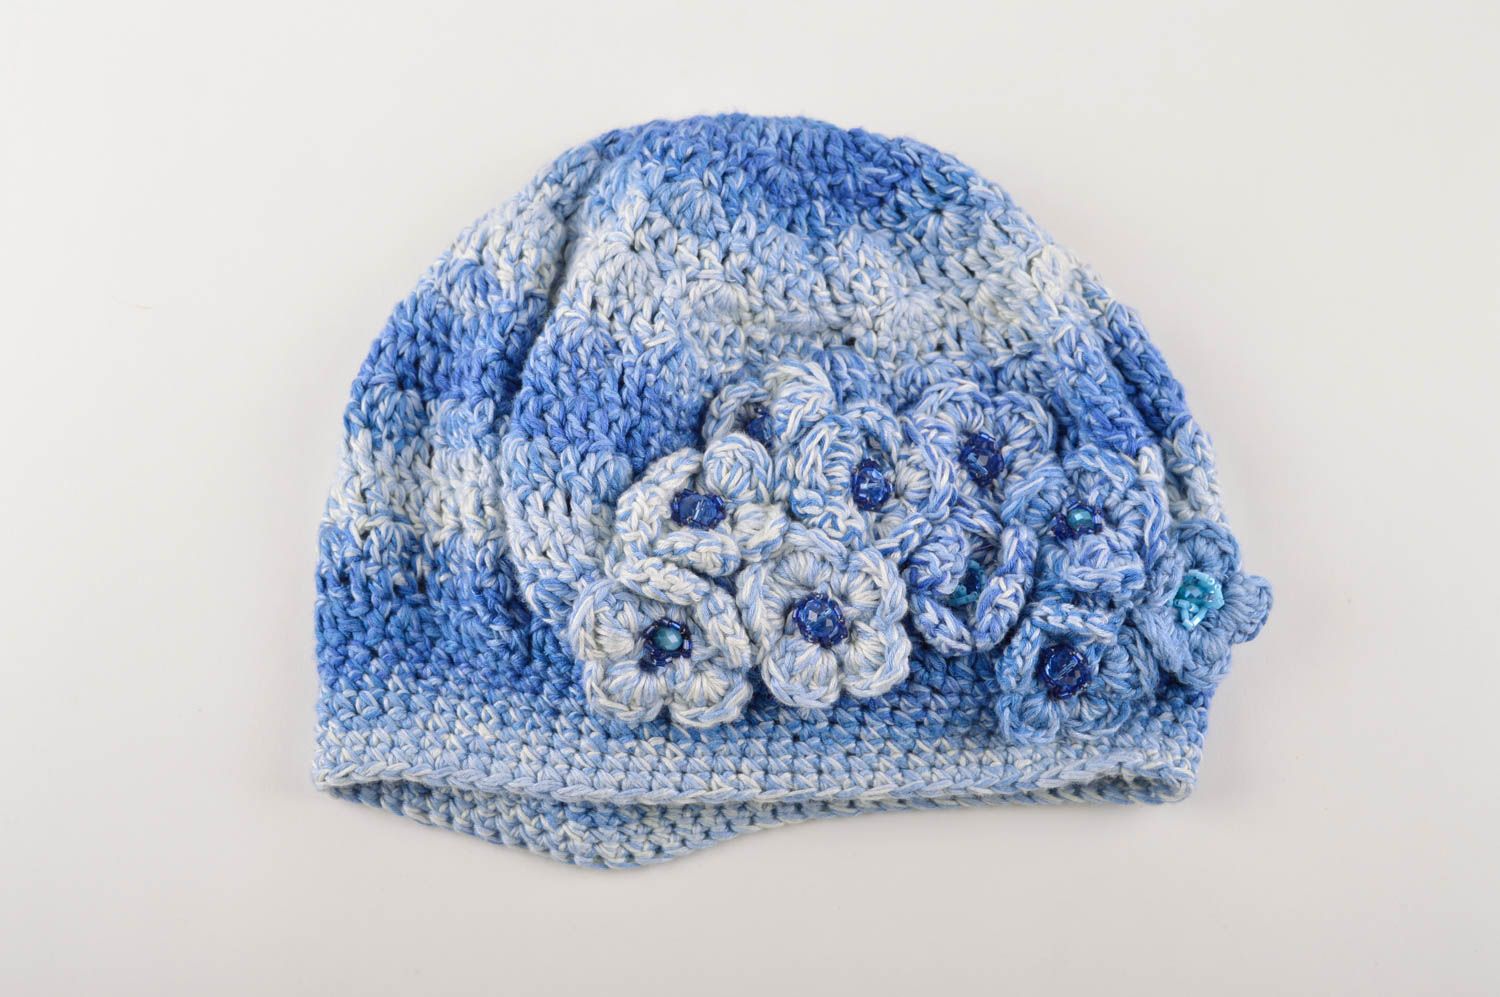 Handmade crochet hat designer accessories hats for women warm hat gifts for girl photo 5